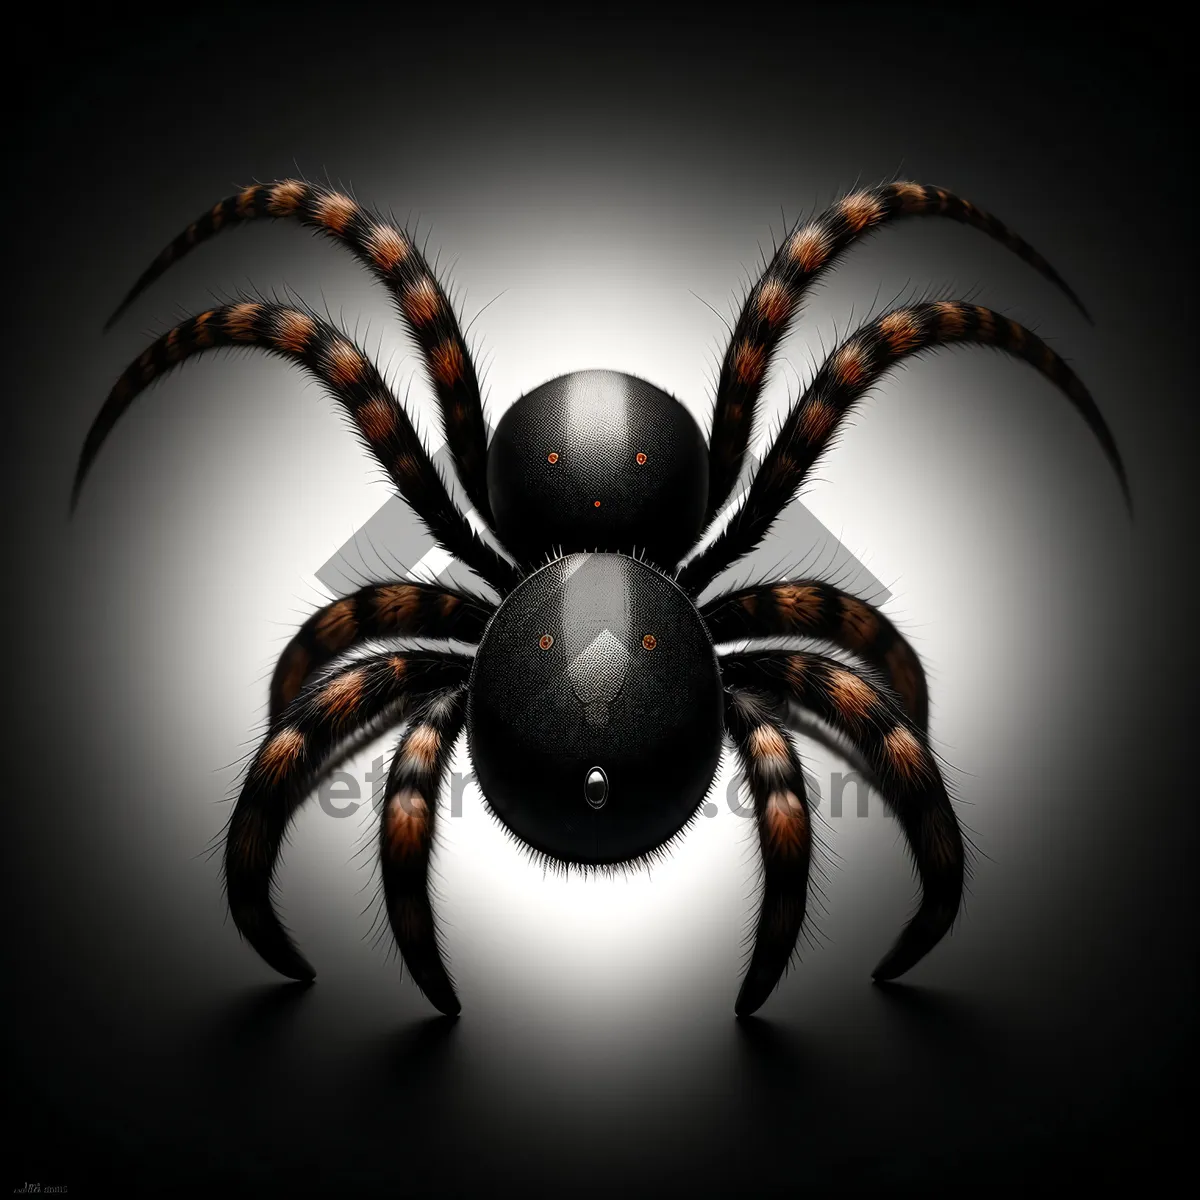 Picture of Black Widow, the notorious venomous arachnid